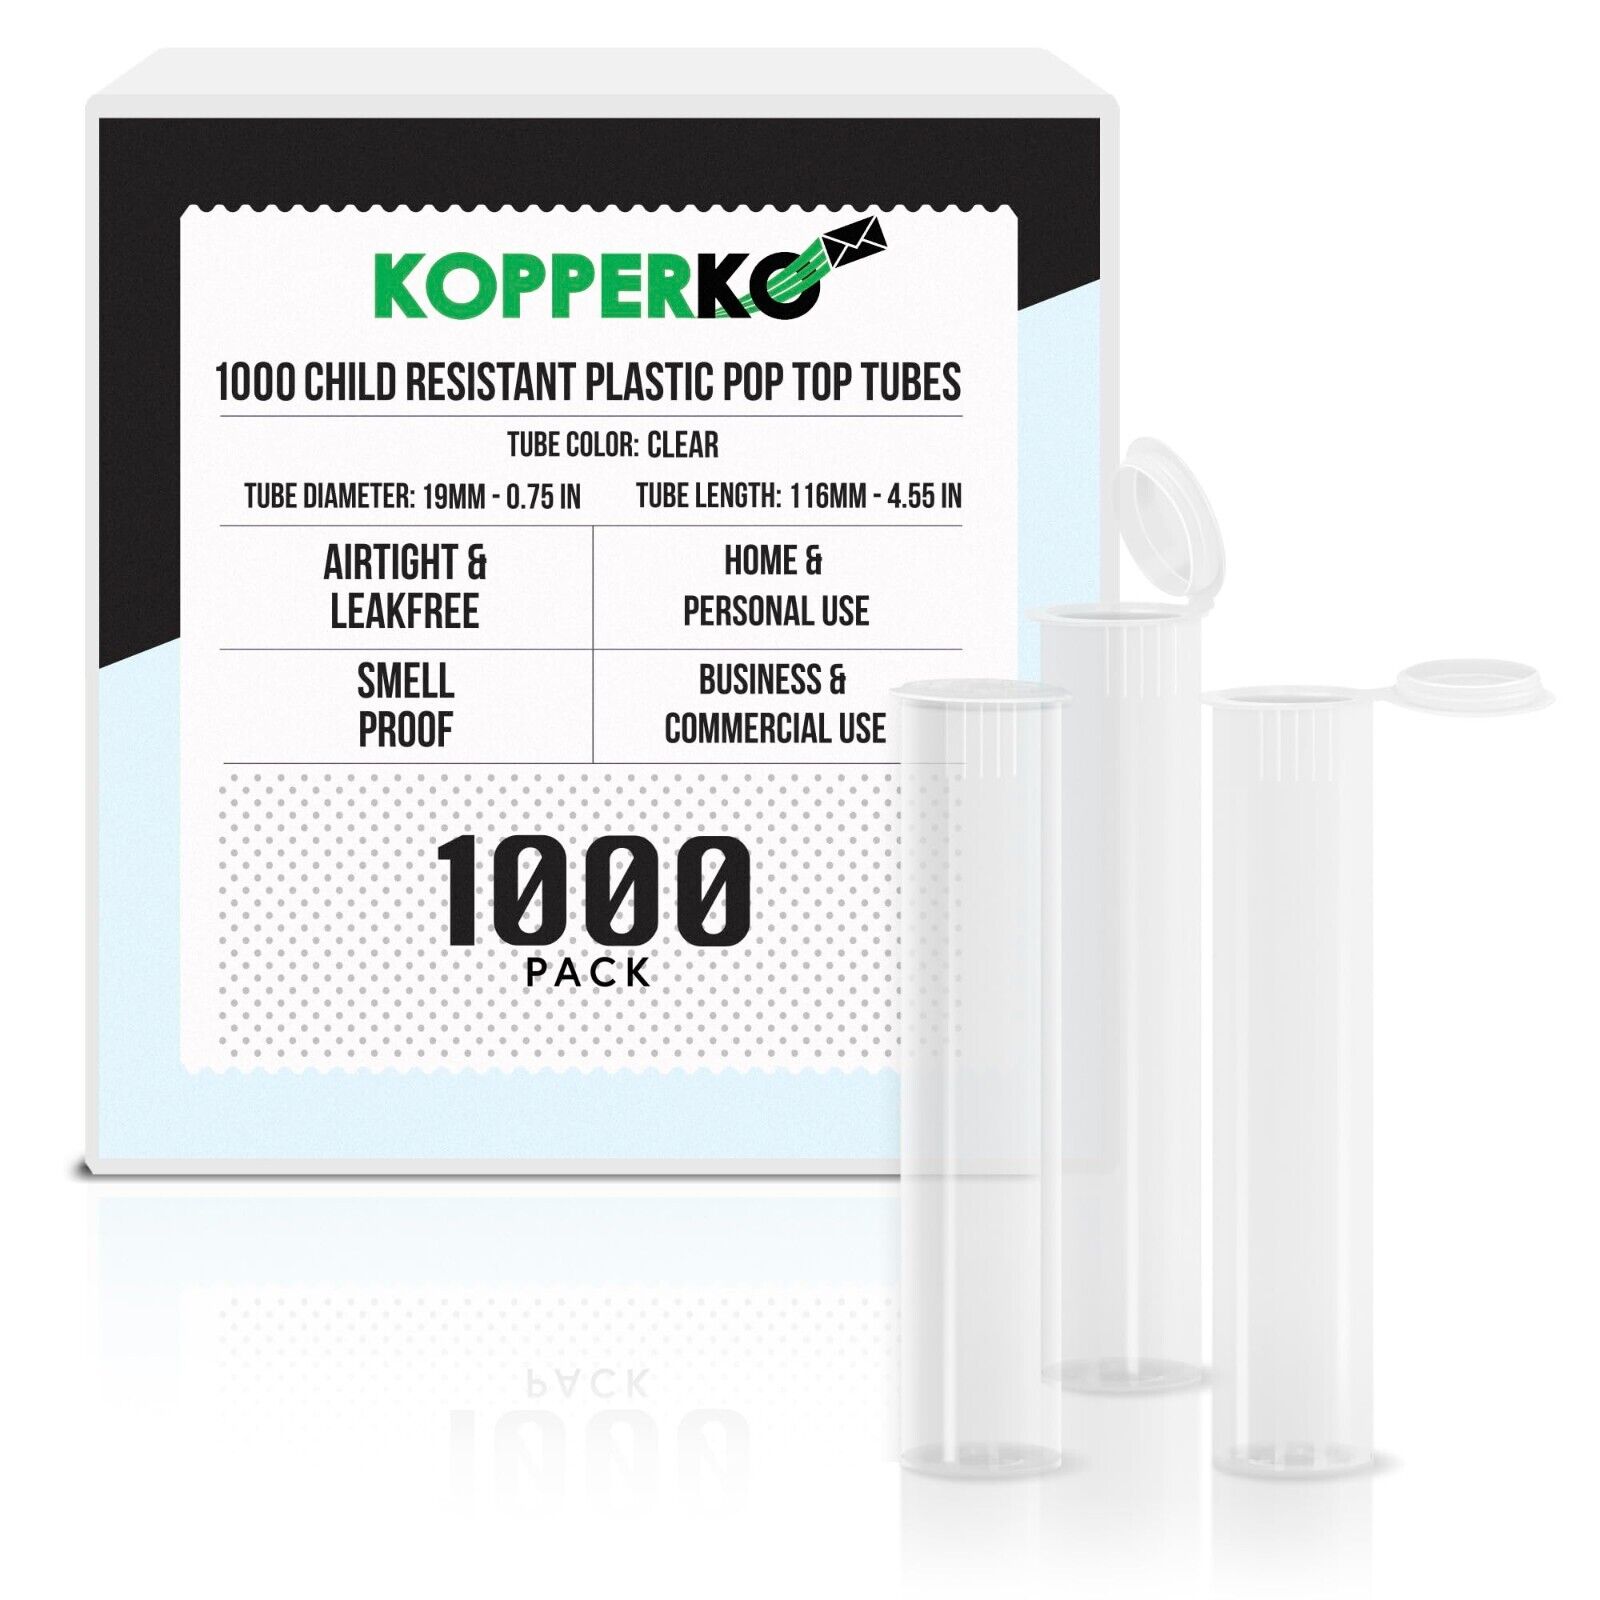 Kopperko 1000 Pack 116mm Plastic Pop Top Tube - Child Resistant - Clear